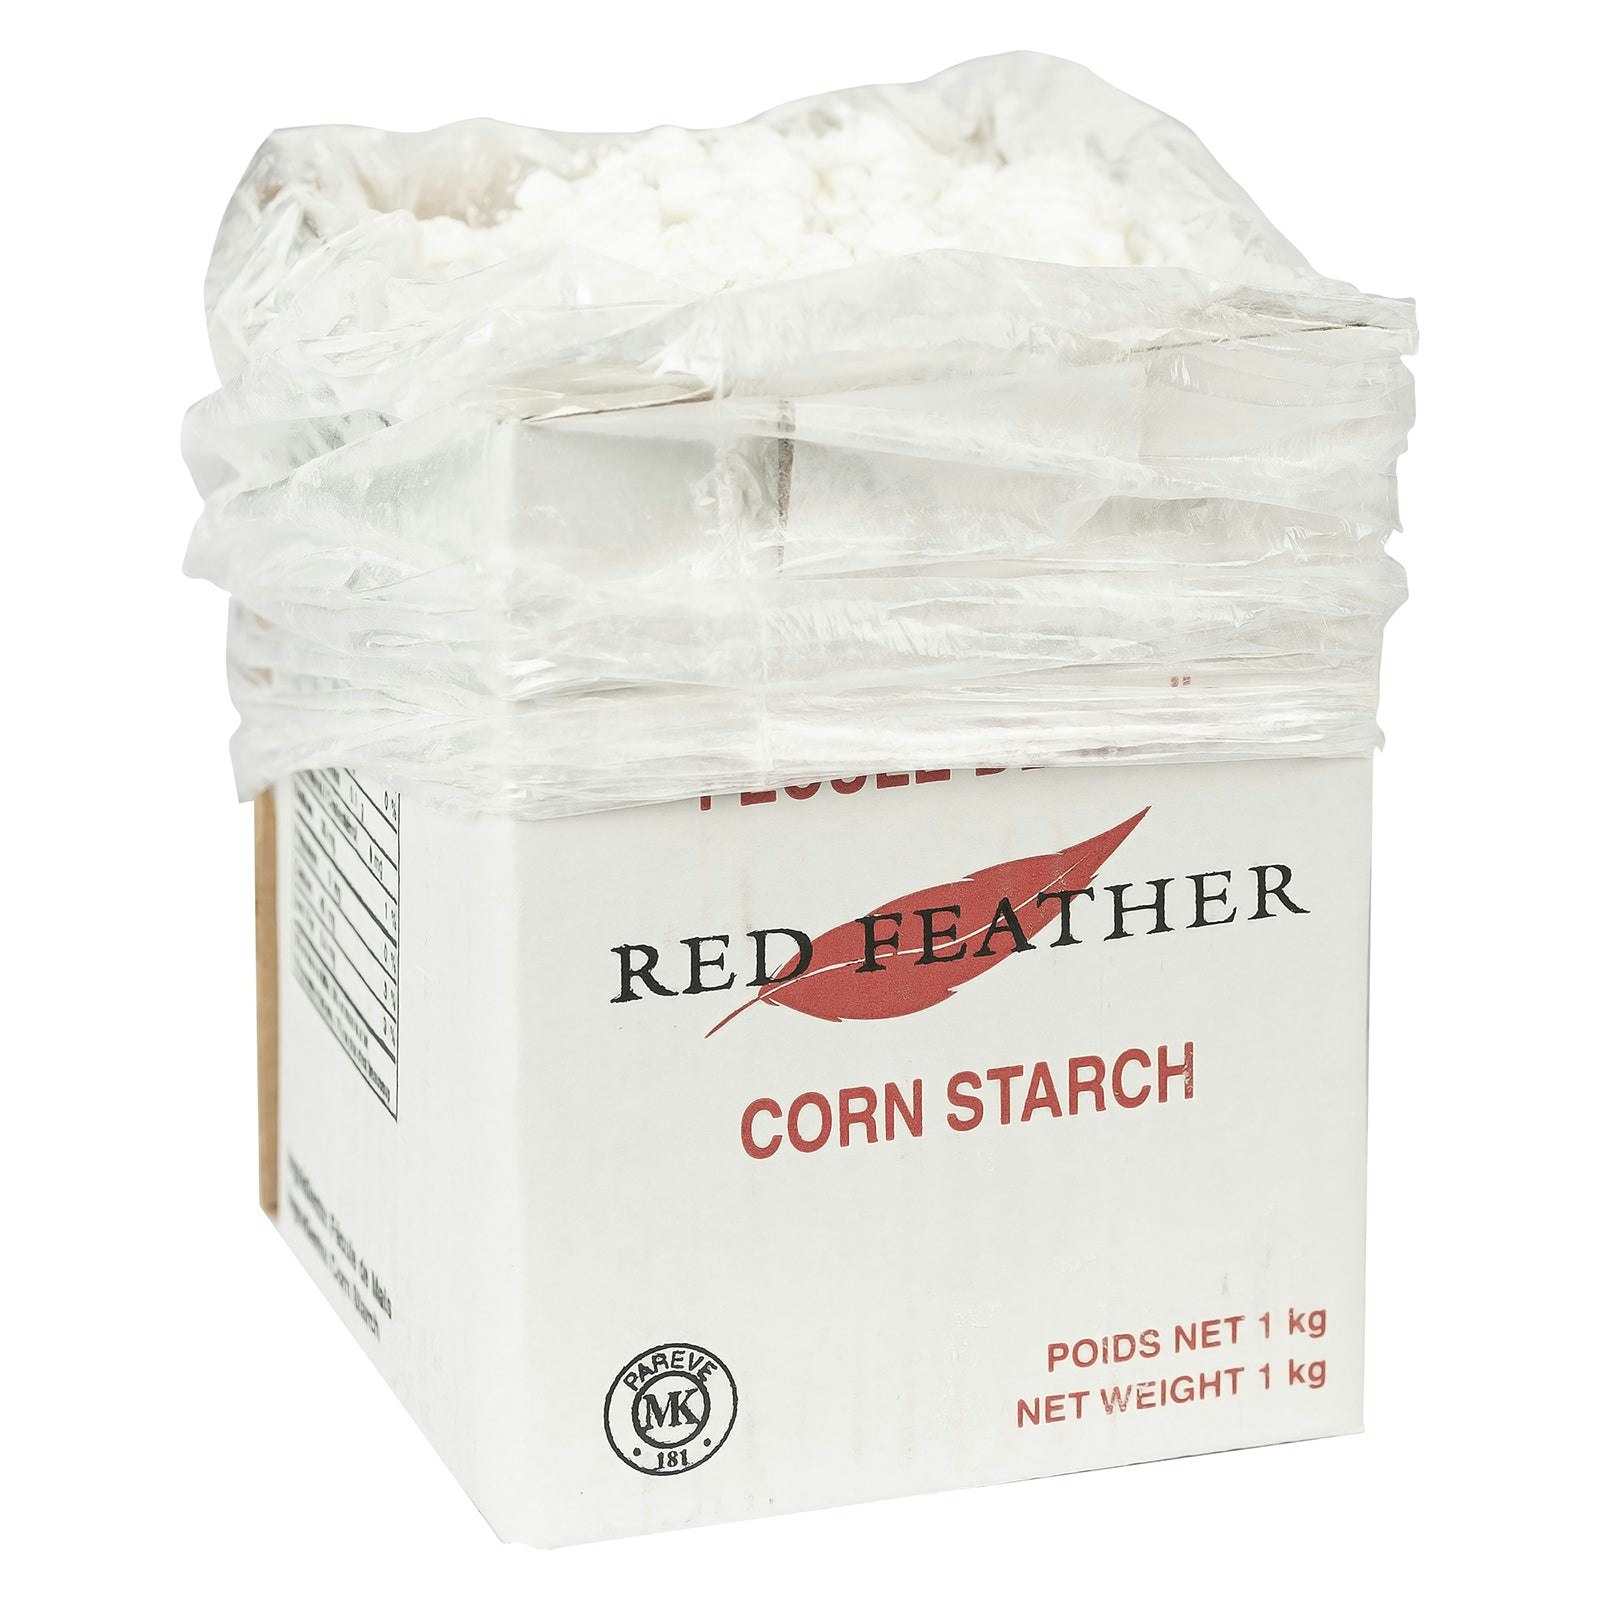 RED FEATHER Cornstarch - Carton